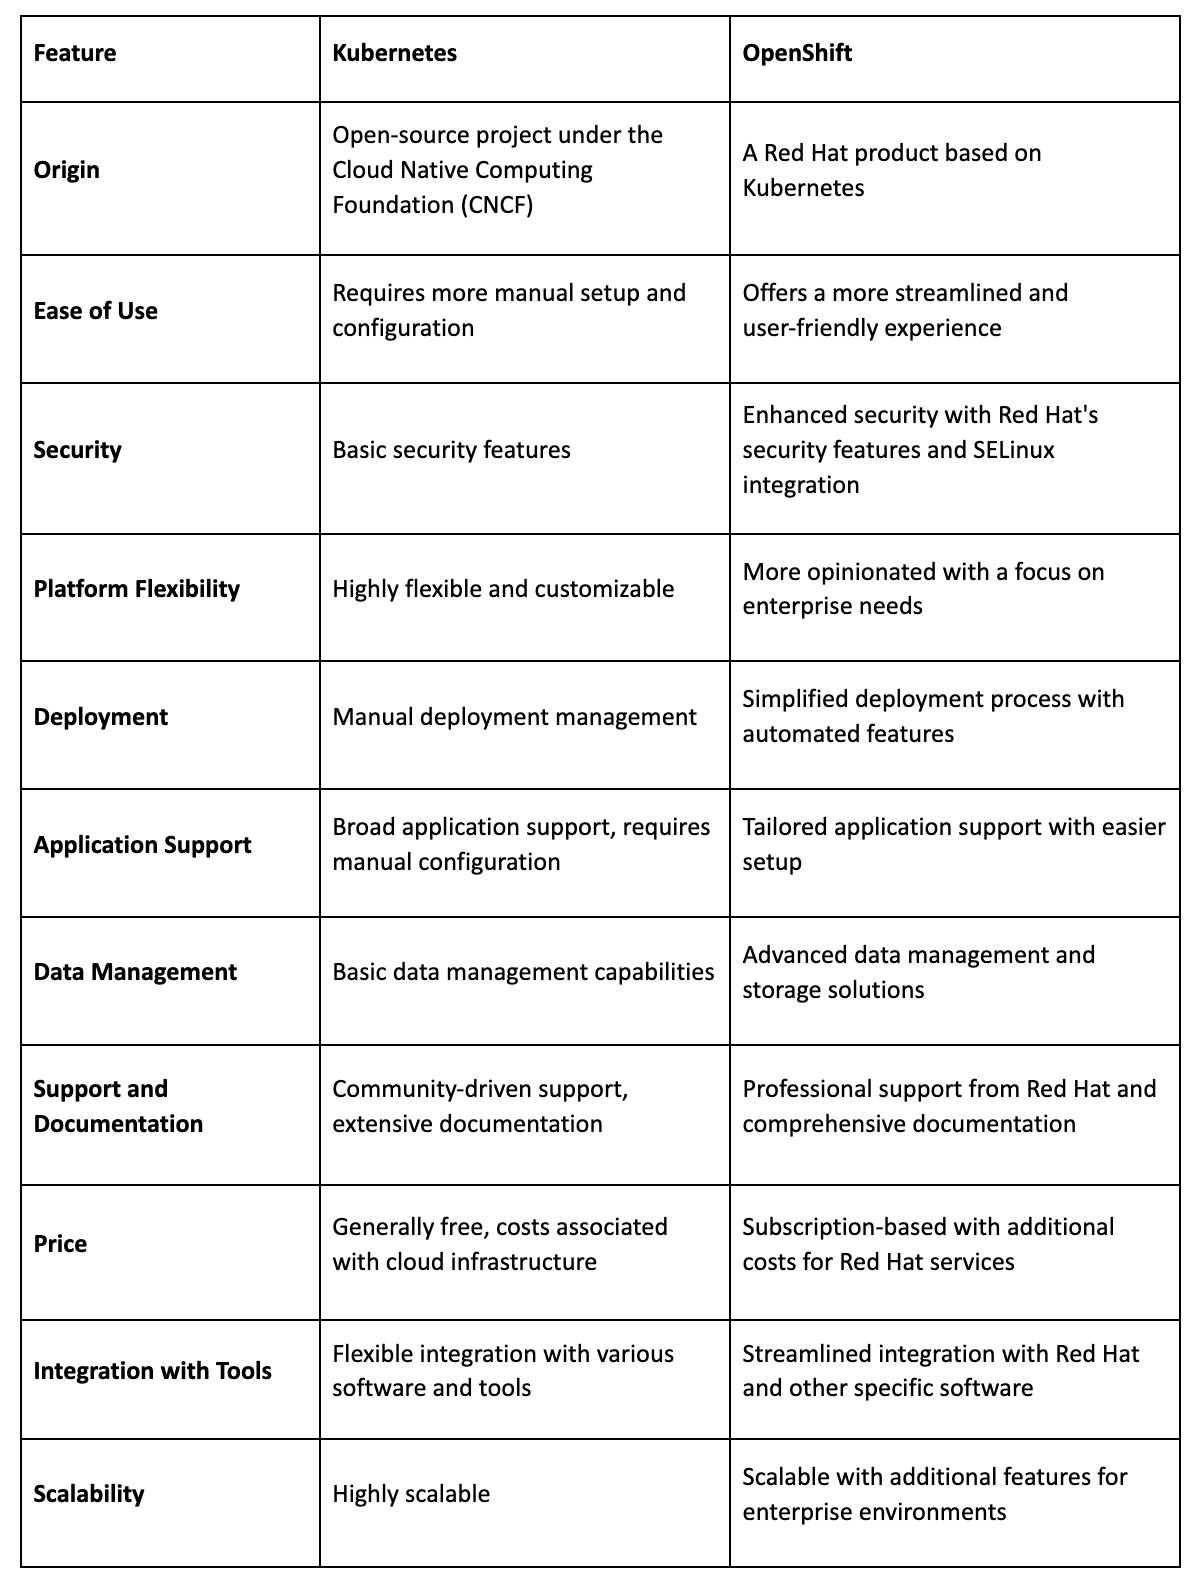 Openshift Vs. Kubernetes: Comparison Summary Table